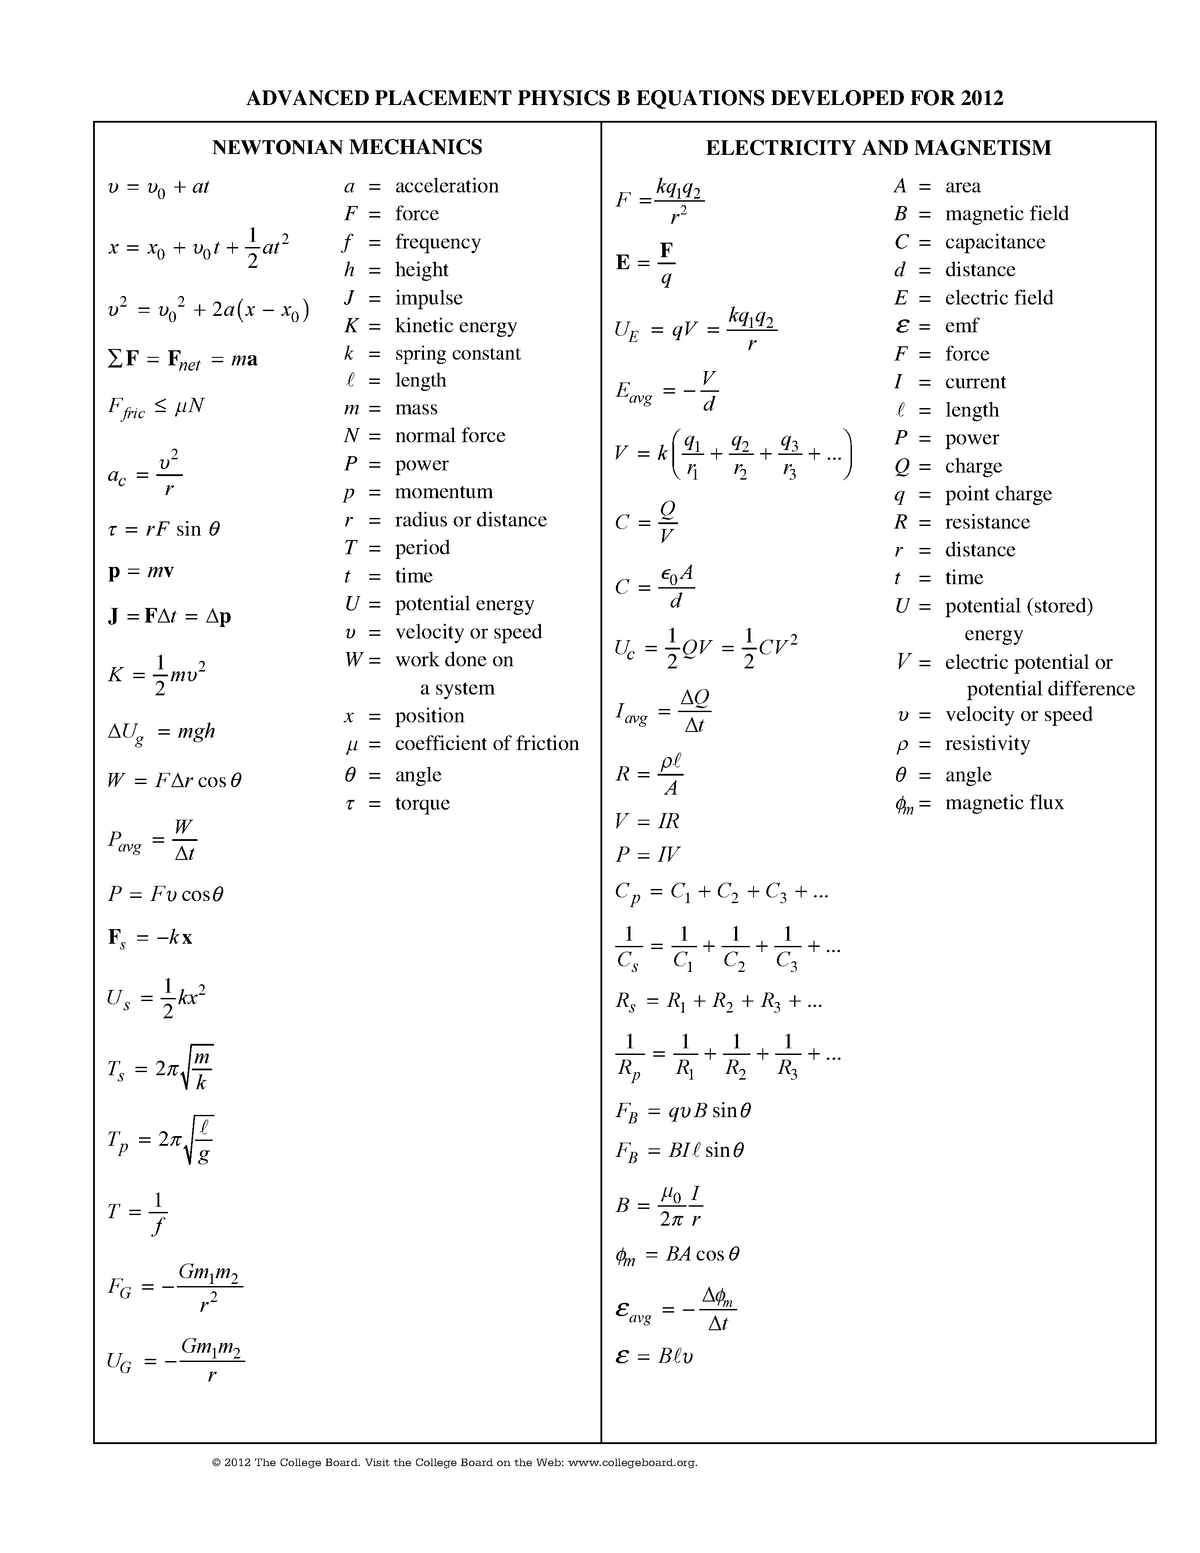 Equations 240 - Equation list - ADVANCED PLACEMENT PHYSICS B EQUATIONS ...